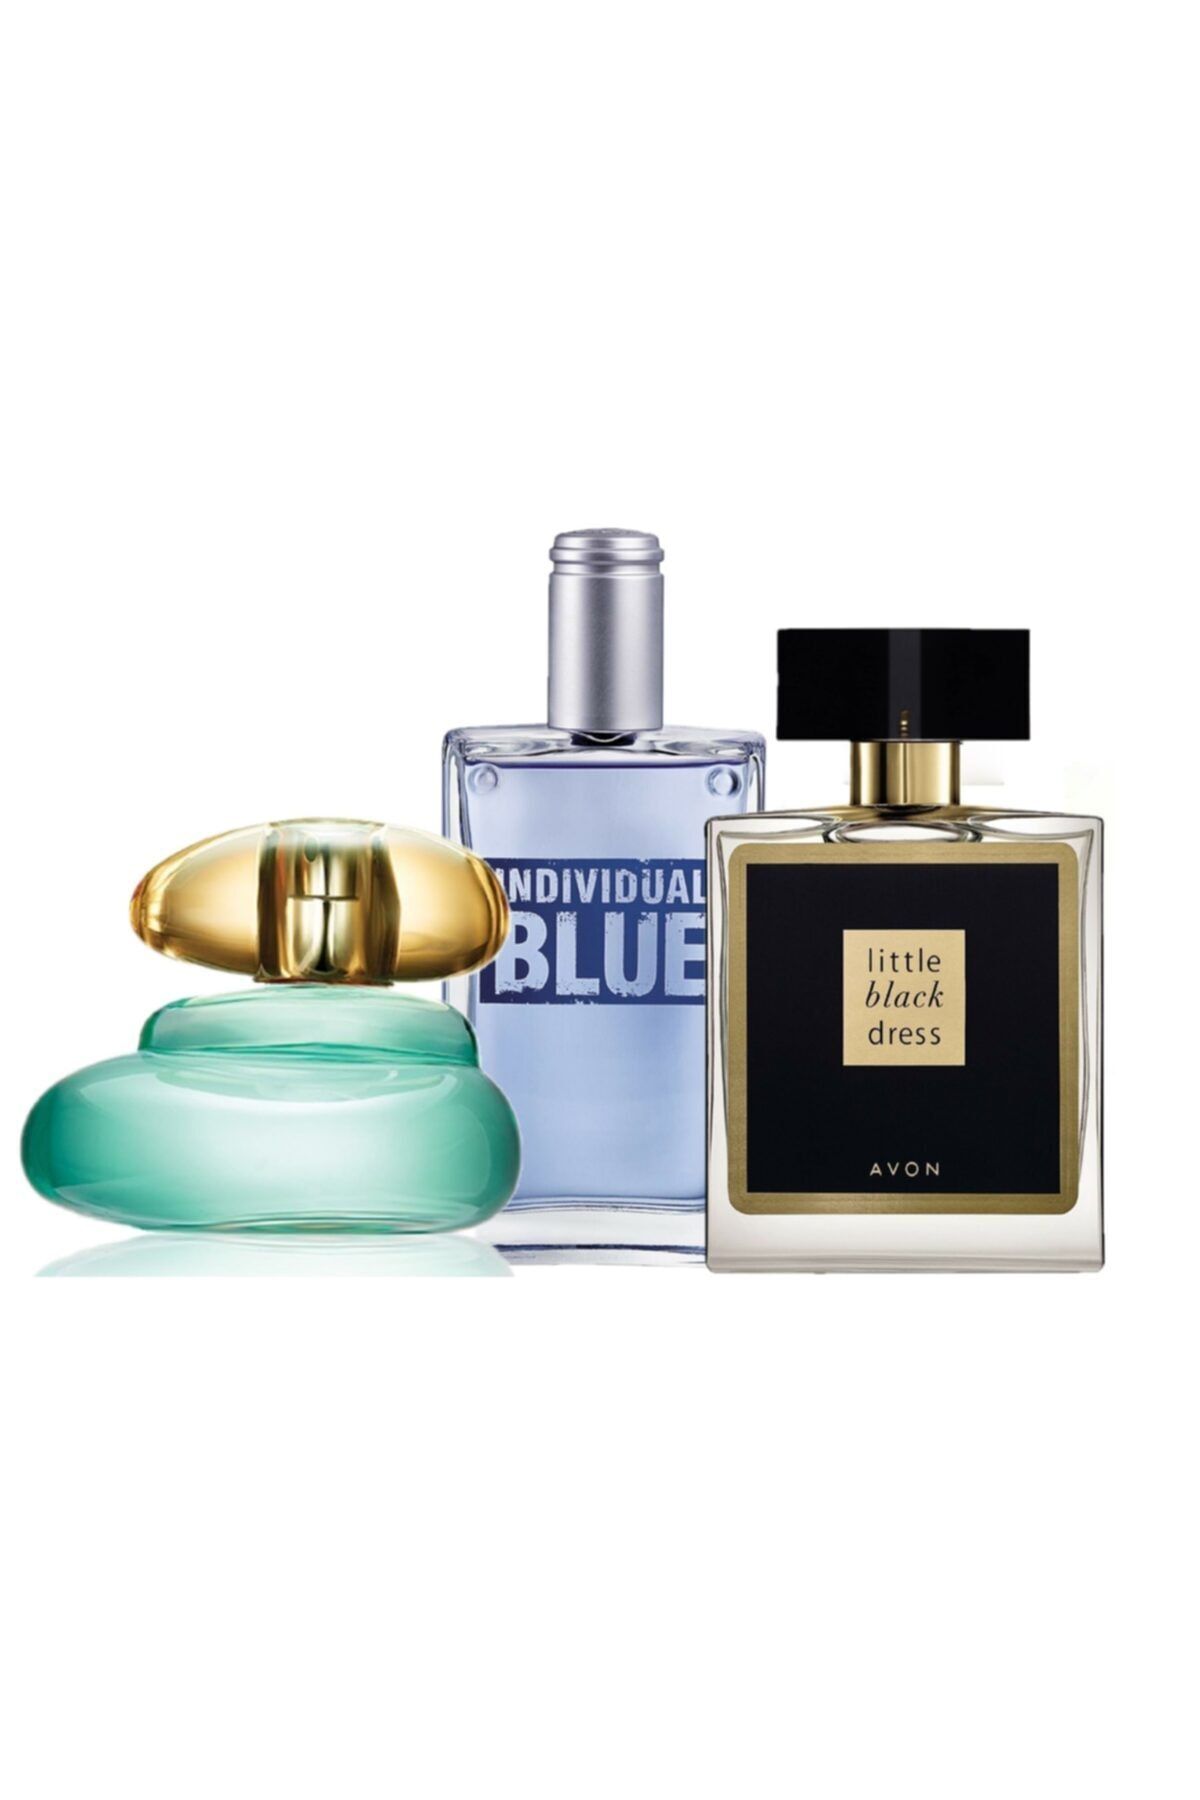 Avon Elvie Edt 50 ml+little Black Dressedp 50 ml+ındividual Blue Erkek Parfüm Edt 100 ml